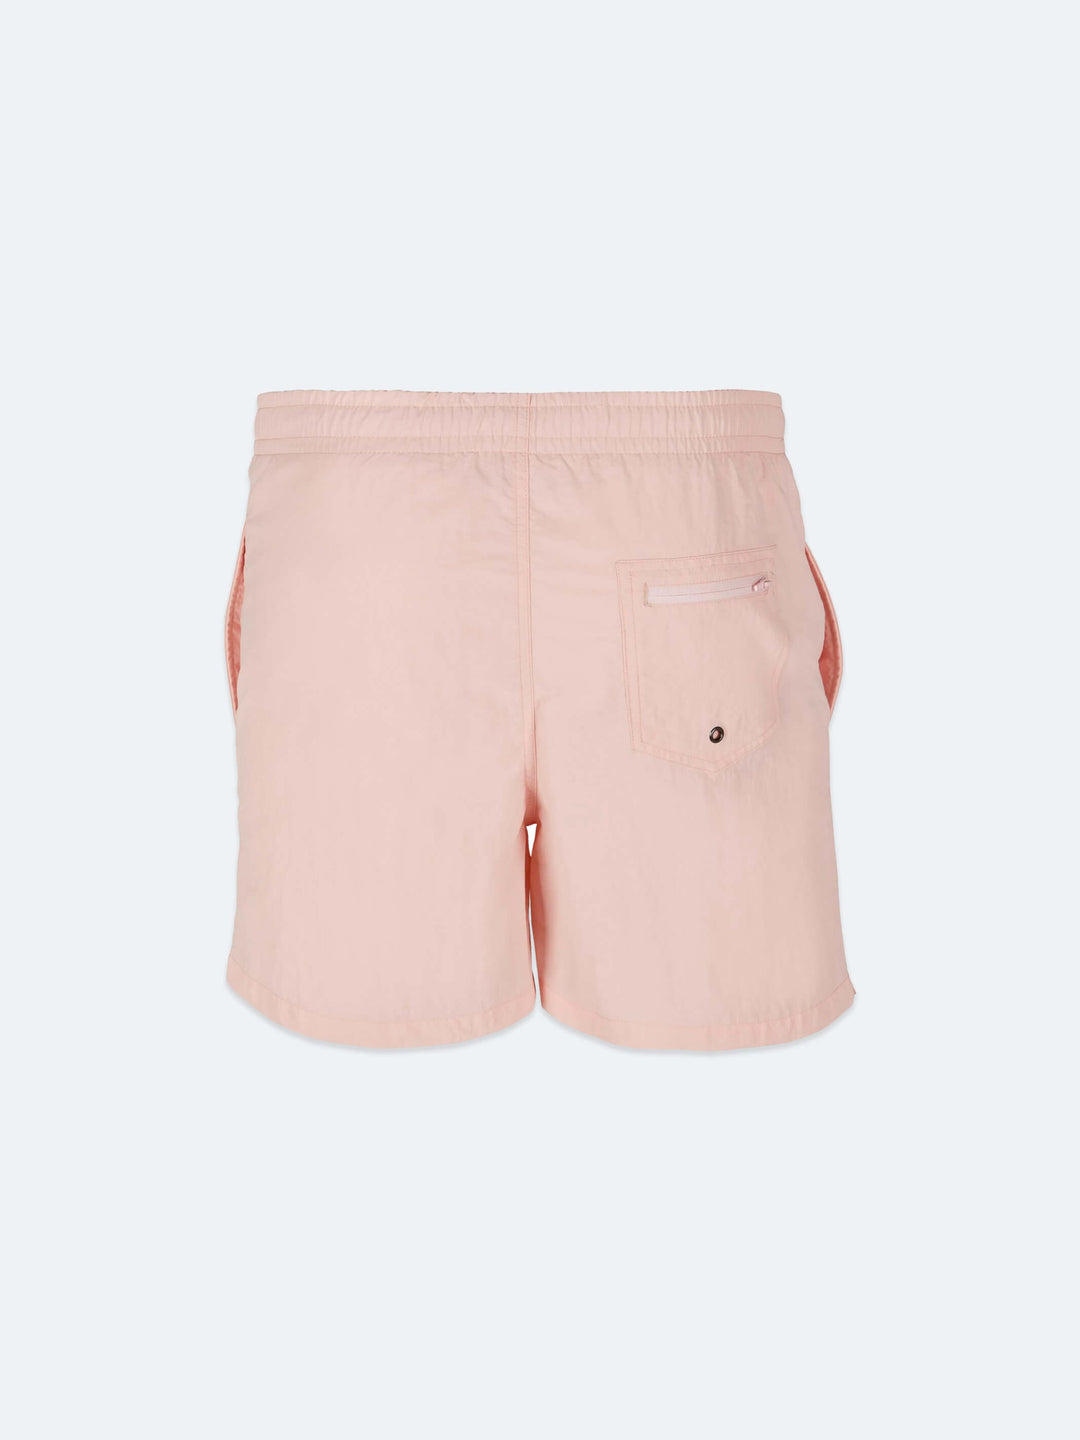 Boxed Swim Shorts (Light Pink)